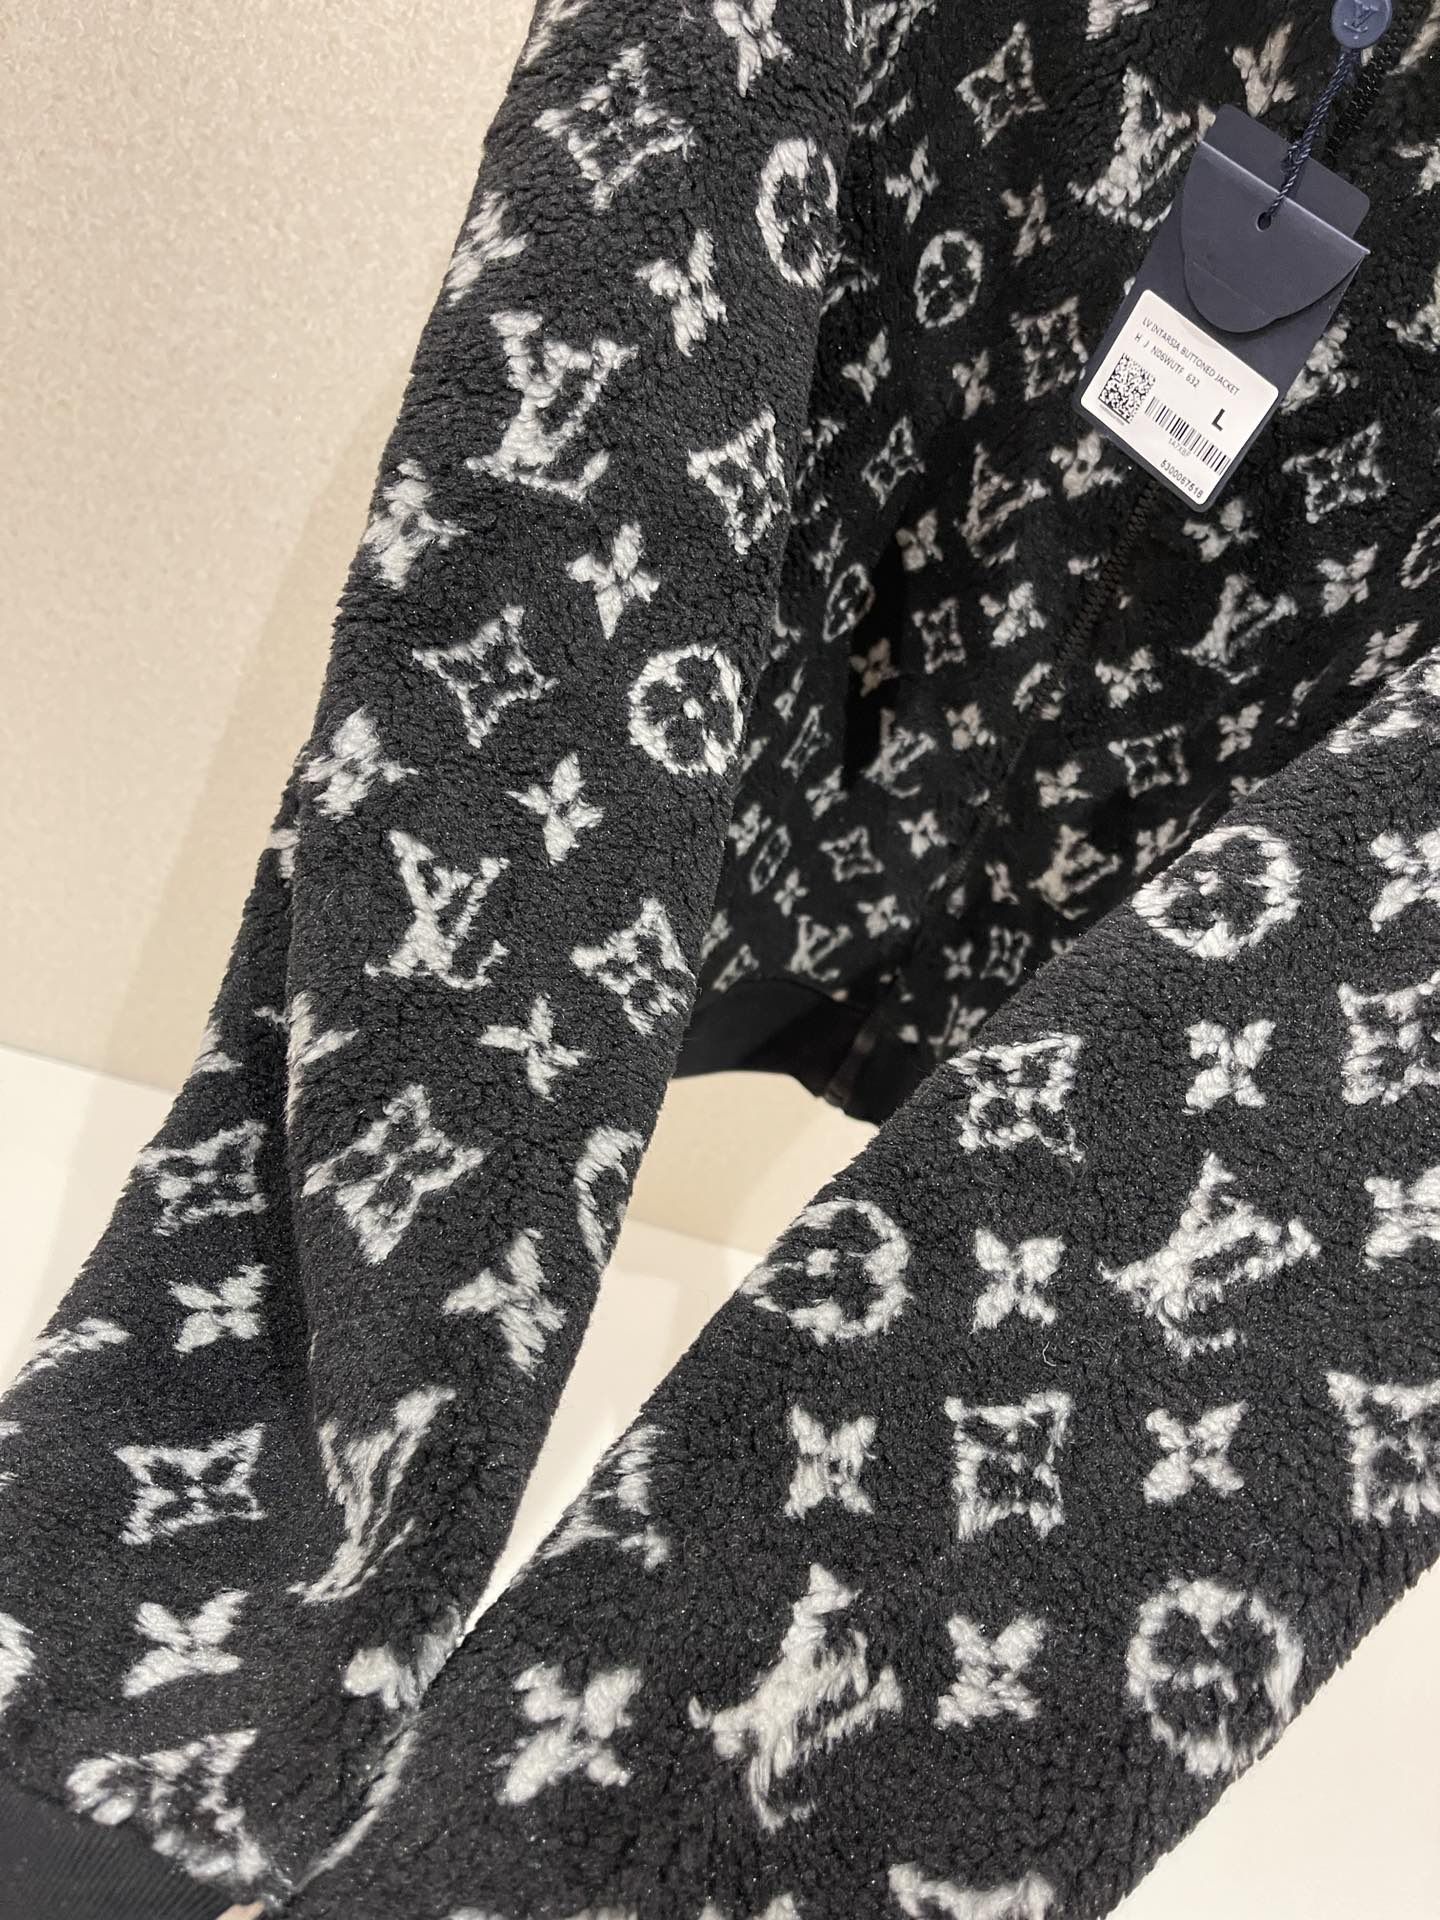 Shop Louis Vuitton Monogram teddy sleeveless jacket (1A9MDL) by La-La☆SHOP